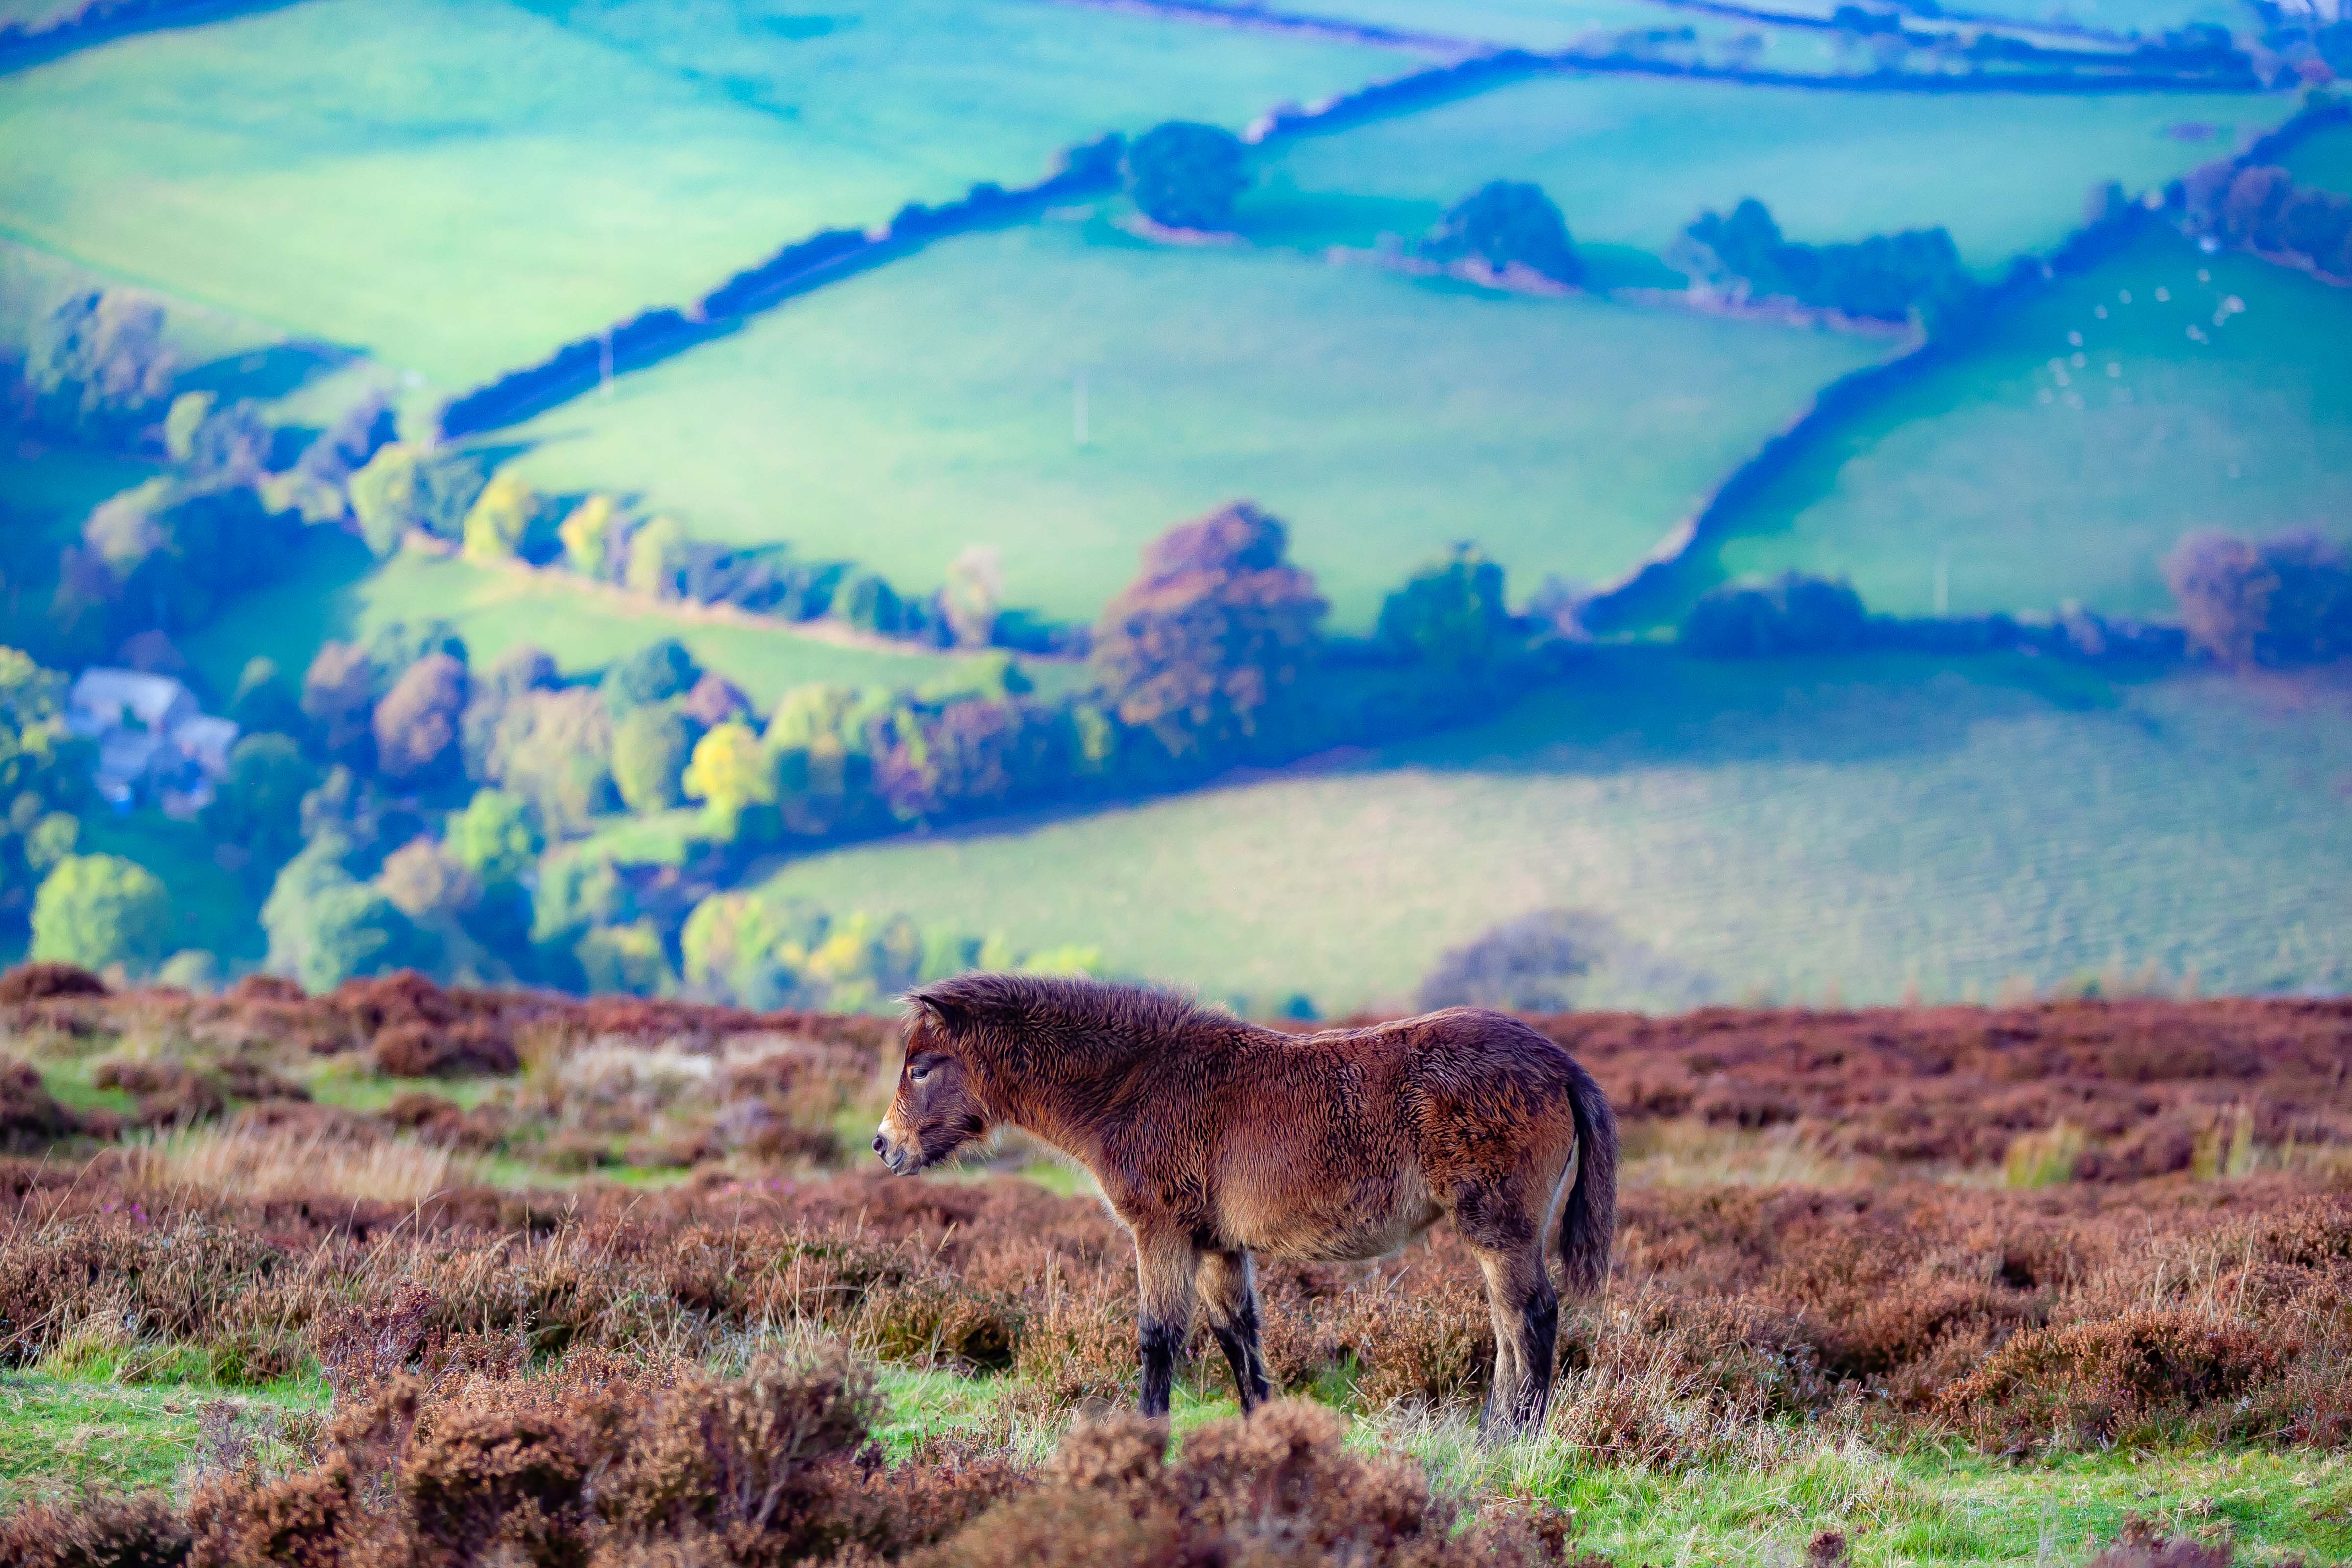 UK, Somerset Prov, Pony And Landscape, 2009, IMG 4755